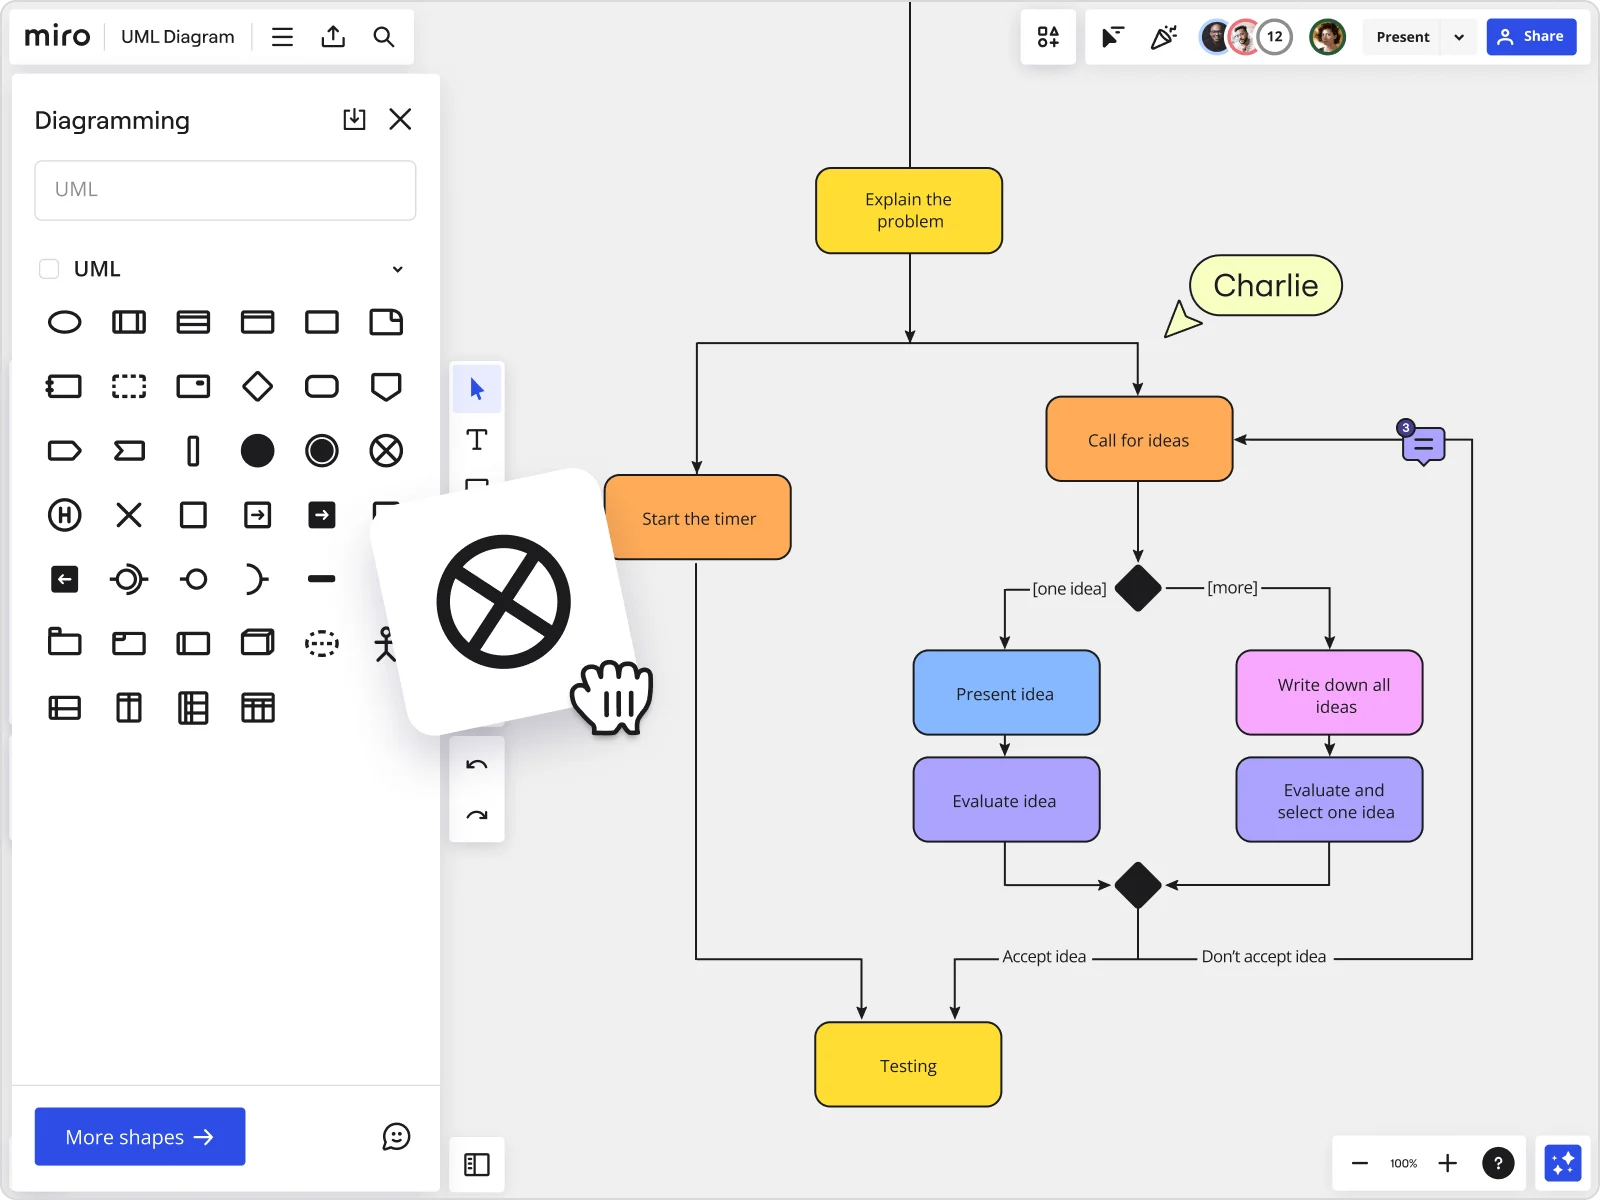 An image of Miro's activity diagram tool